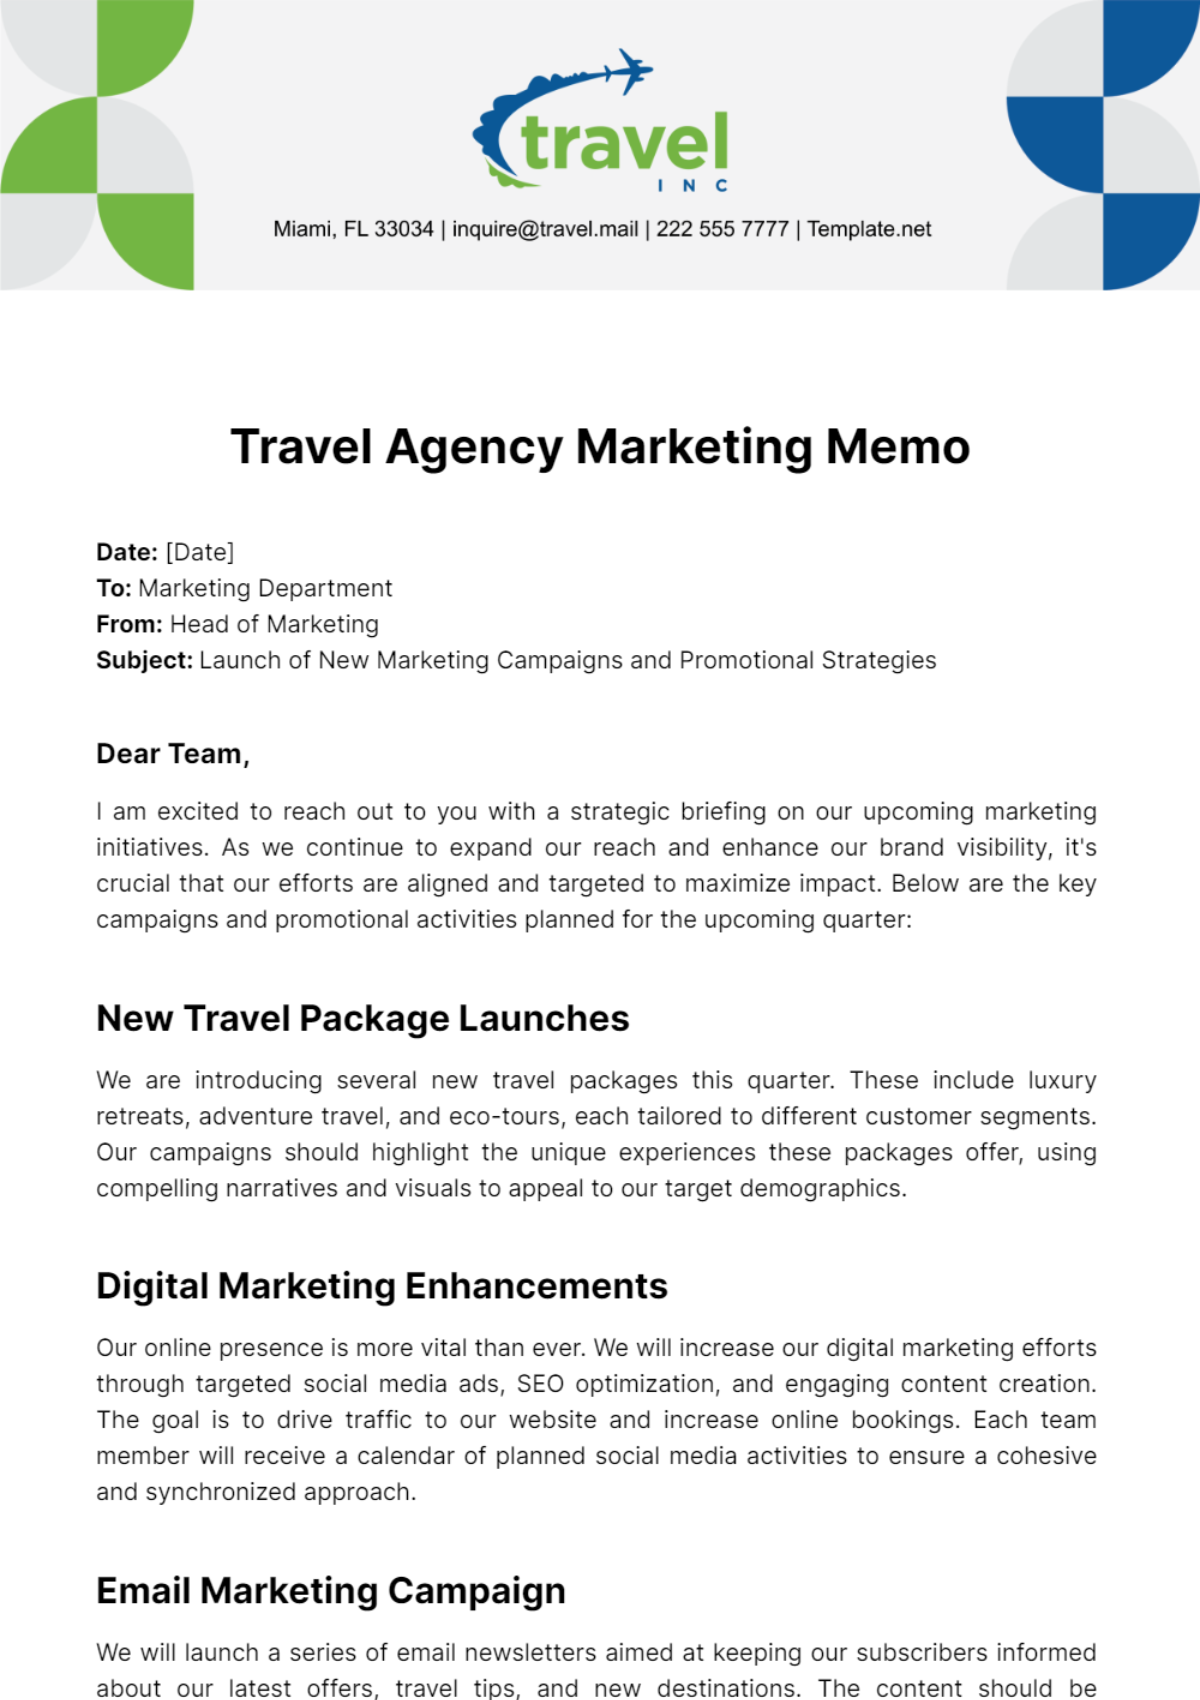 Travel Agency Marketing Memo Template